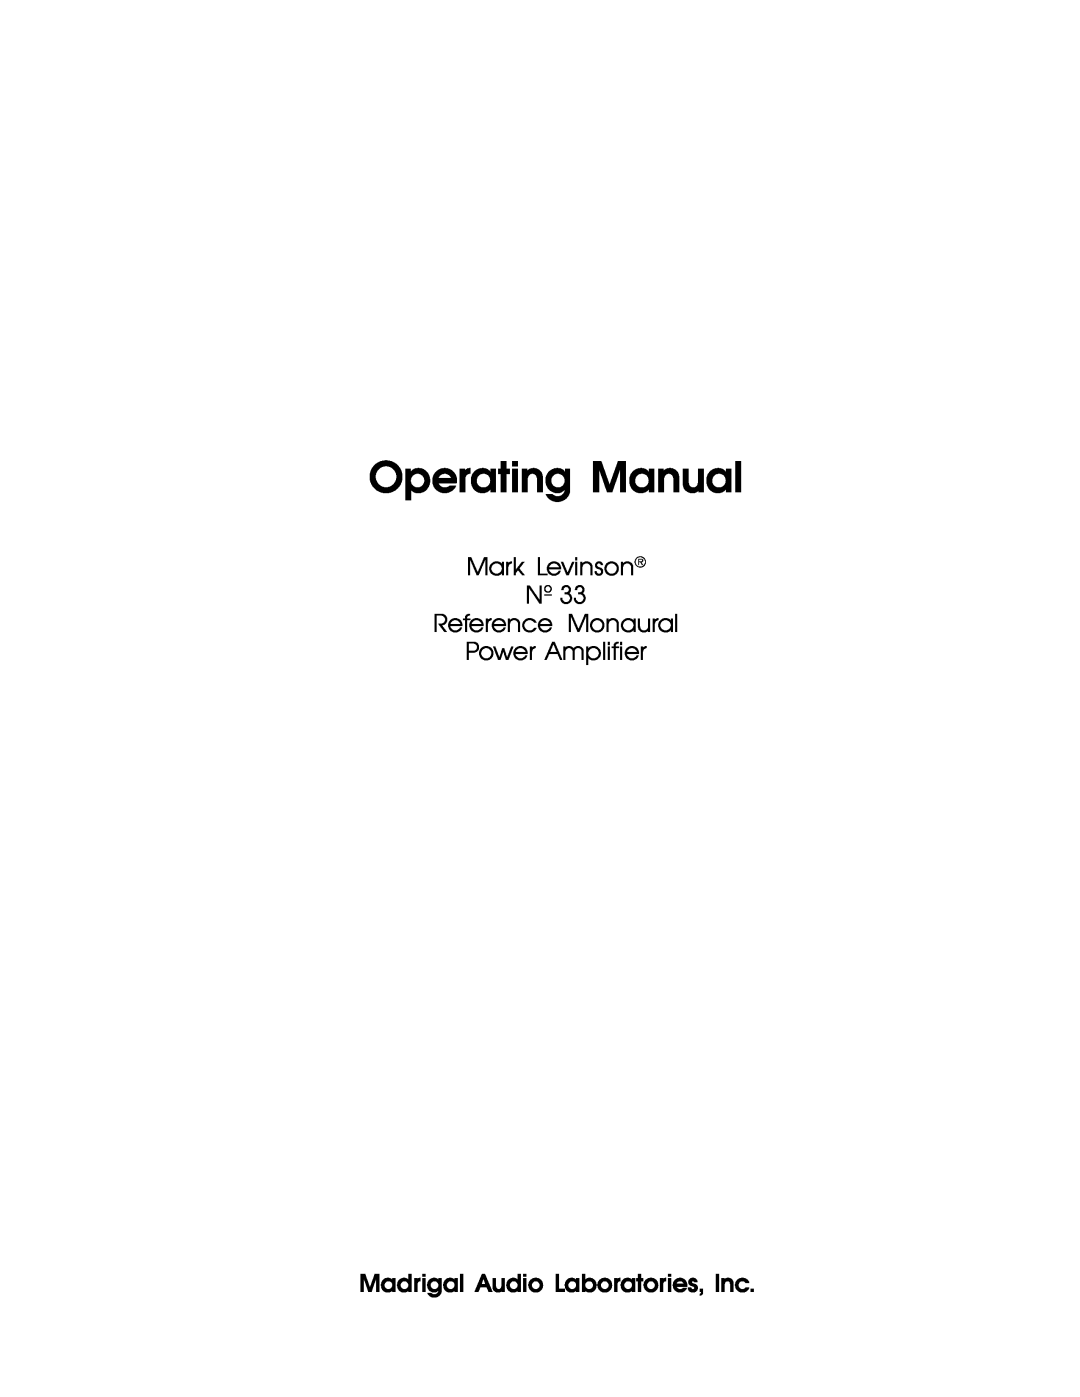 Madrigal Imaging N33, power amplifier manual Operating Manual, Mark Levinson Nº Reference Monaural, Power Amplifier 